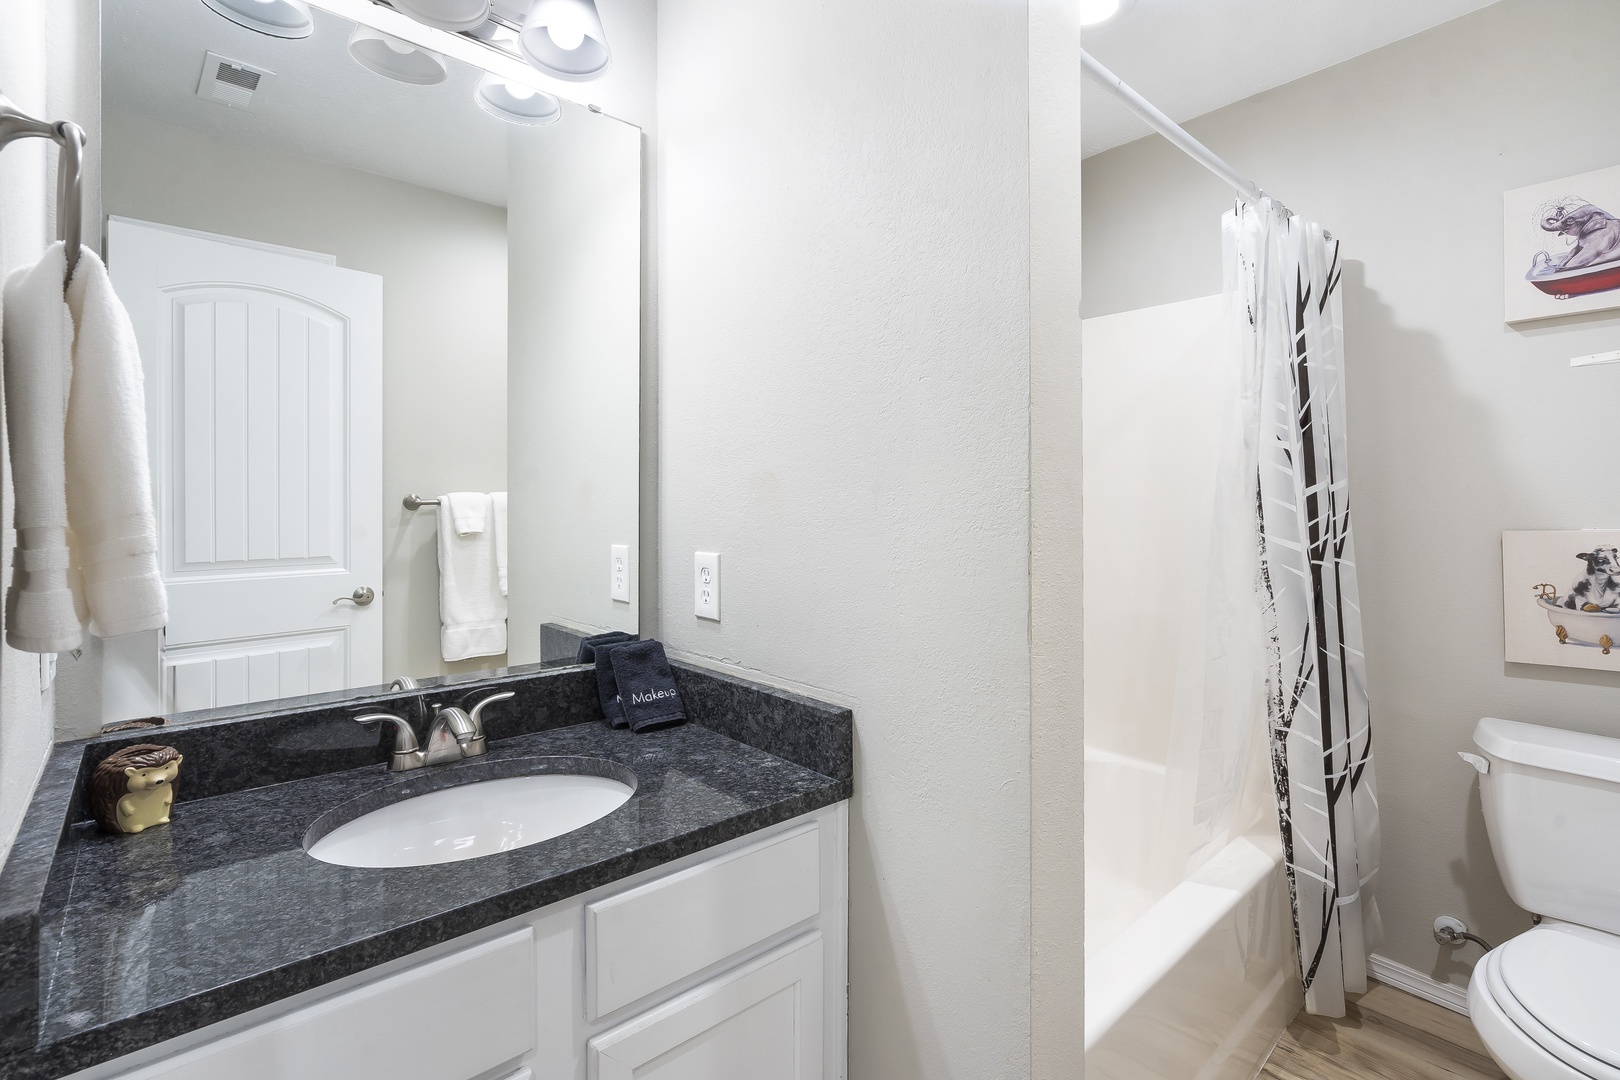 The shared full bathroom showcases a single vanity & shower/tub combo